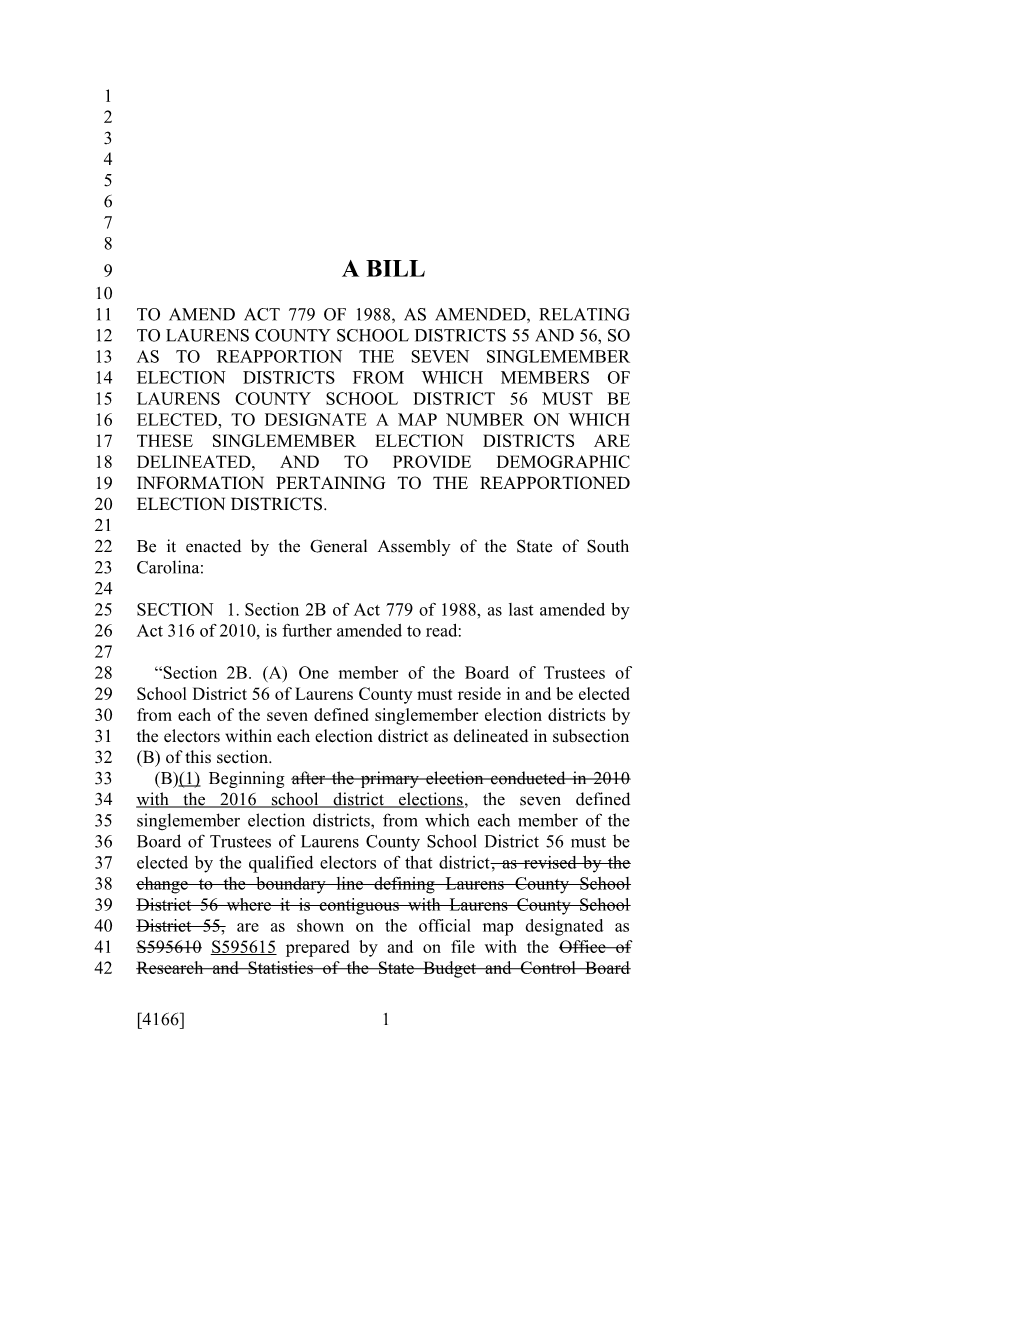 2015-2016 Bill 4166 Text of Previous Version (May 12, 2015) - South Carolina Legislature Online